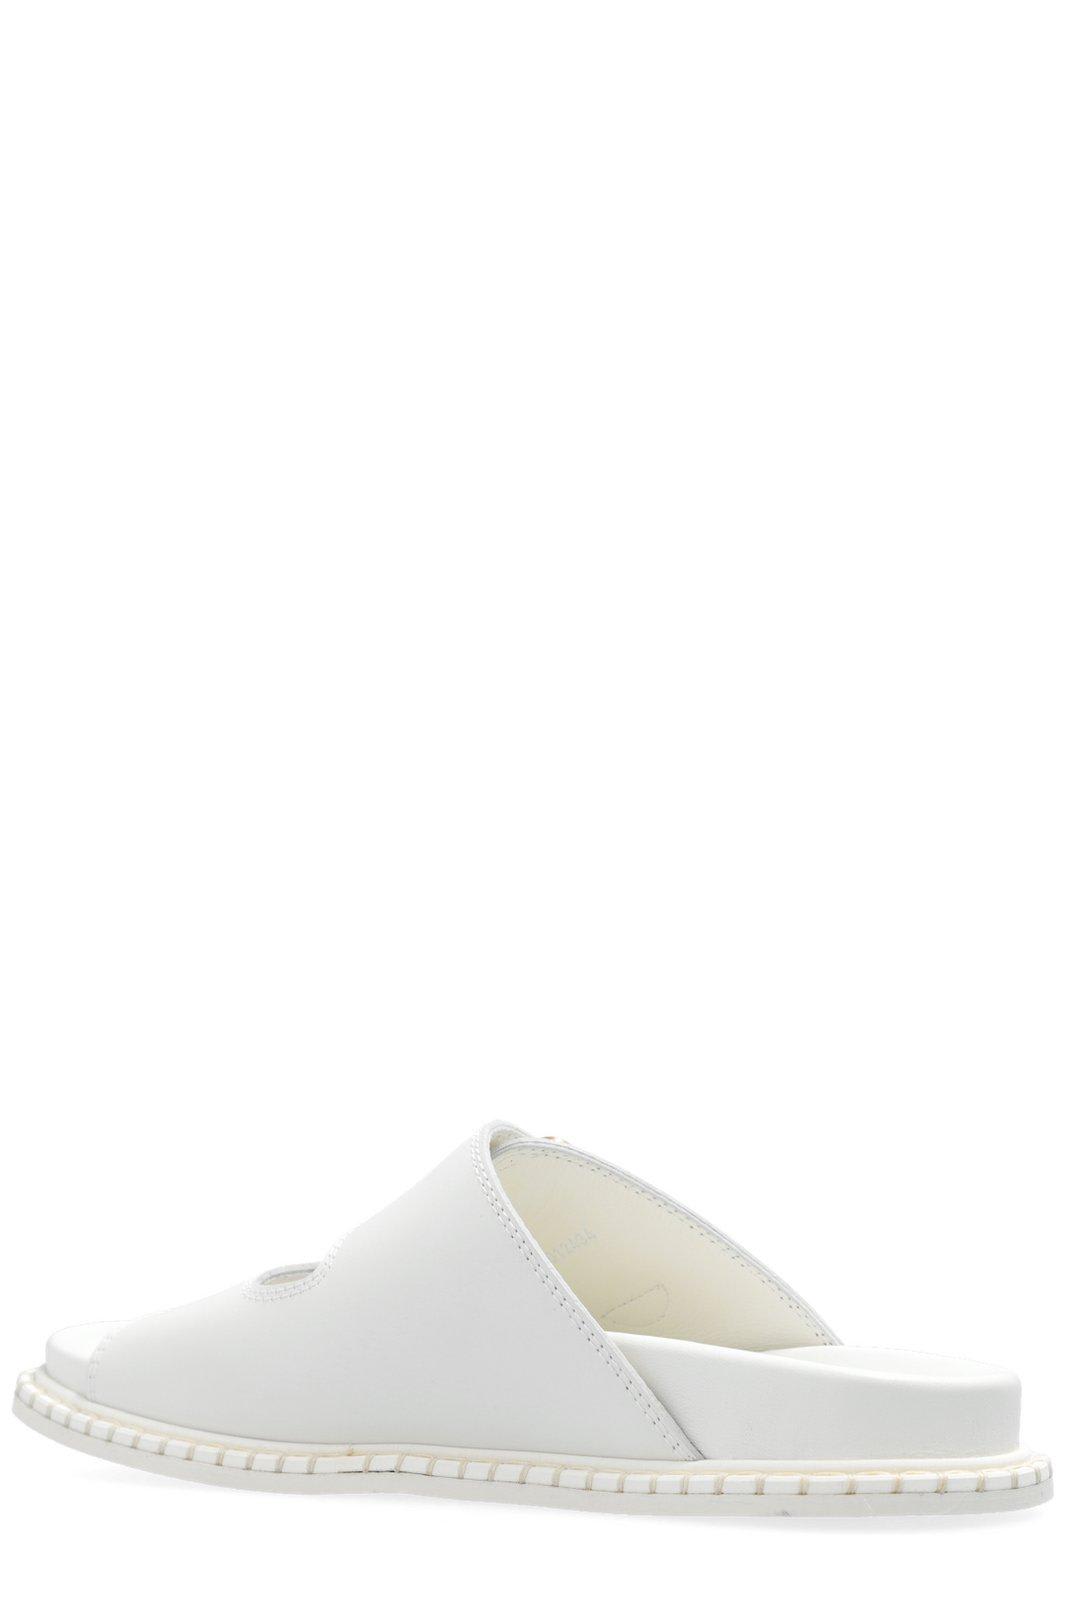 Shop Chloé Rebecca Buckled Sandals In White